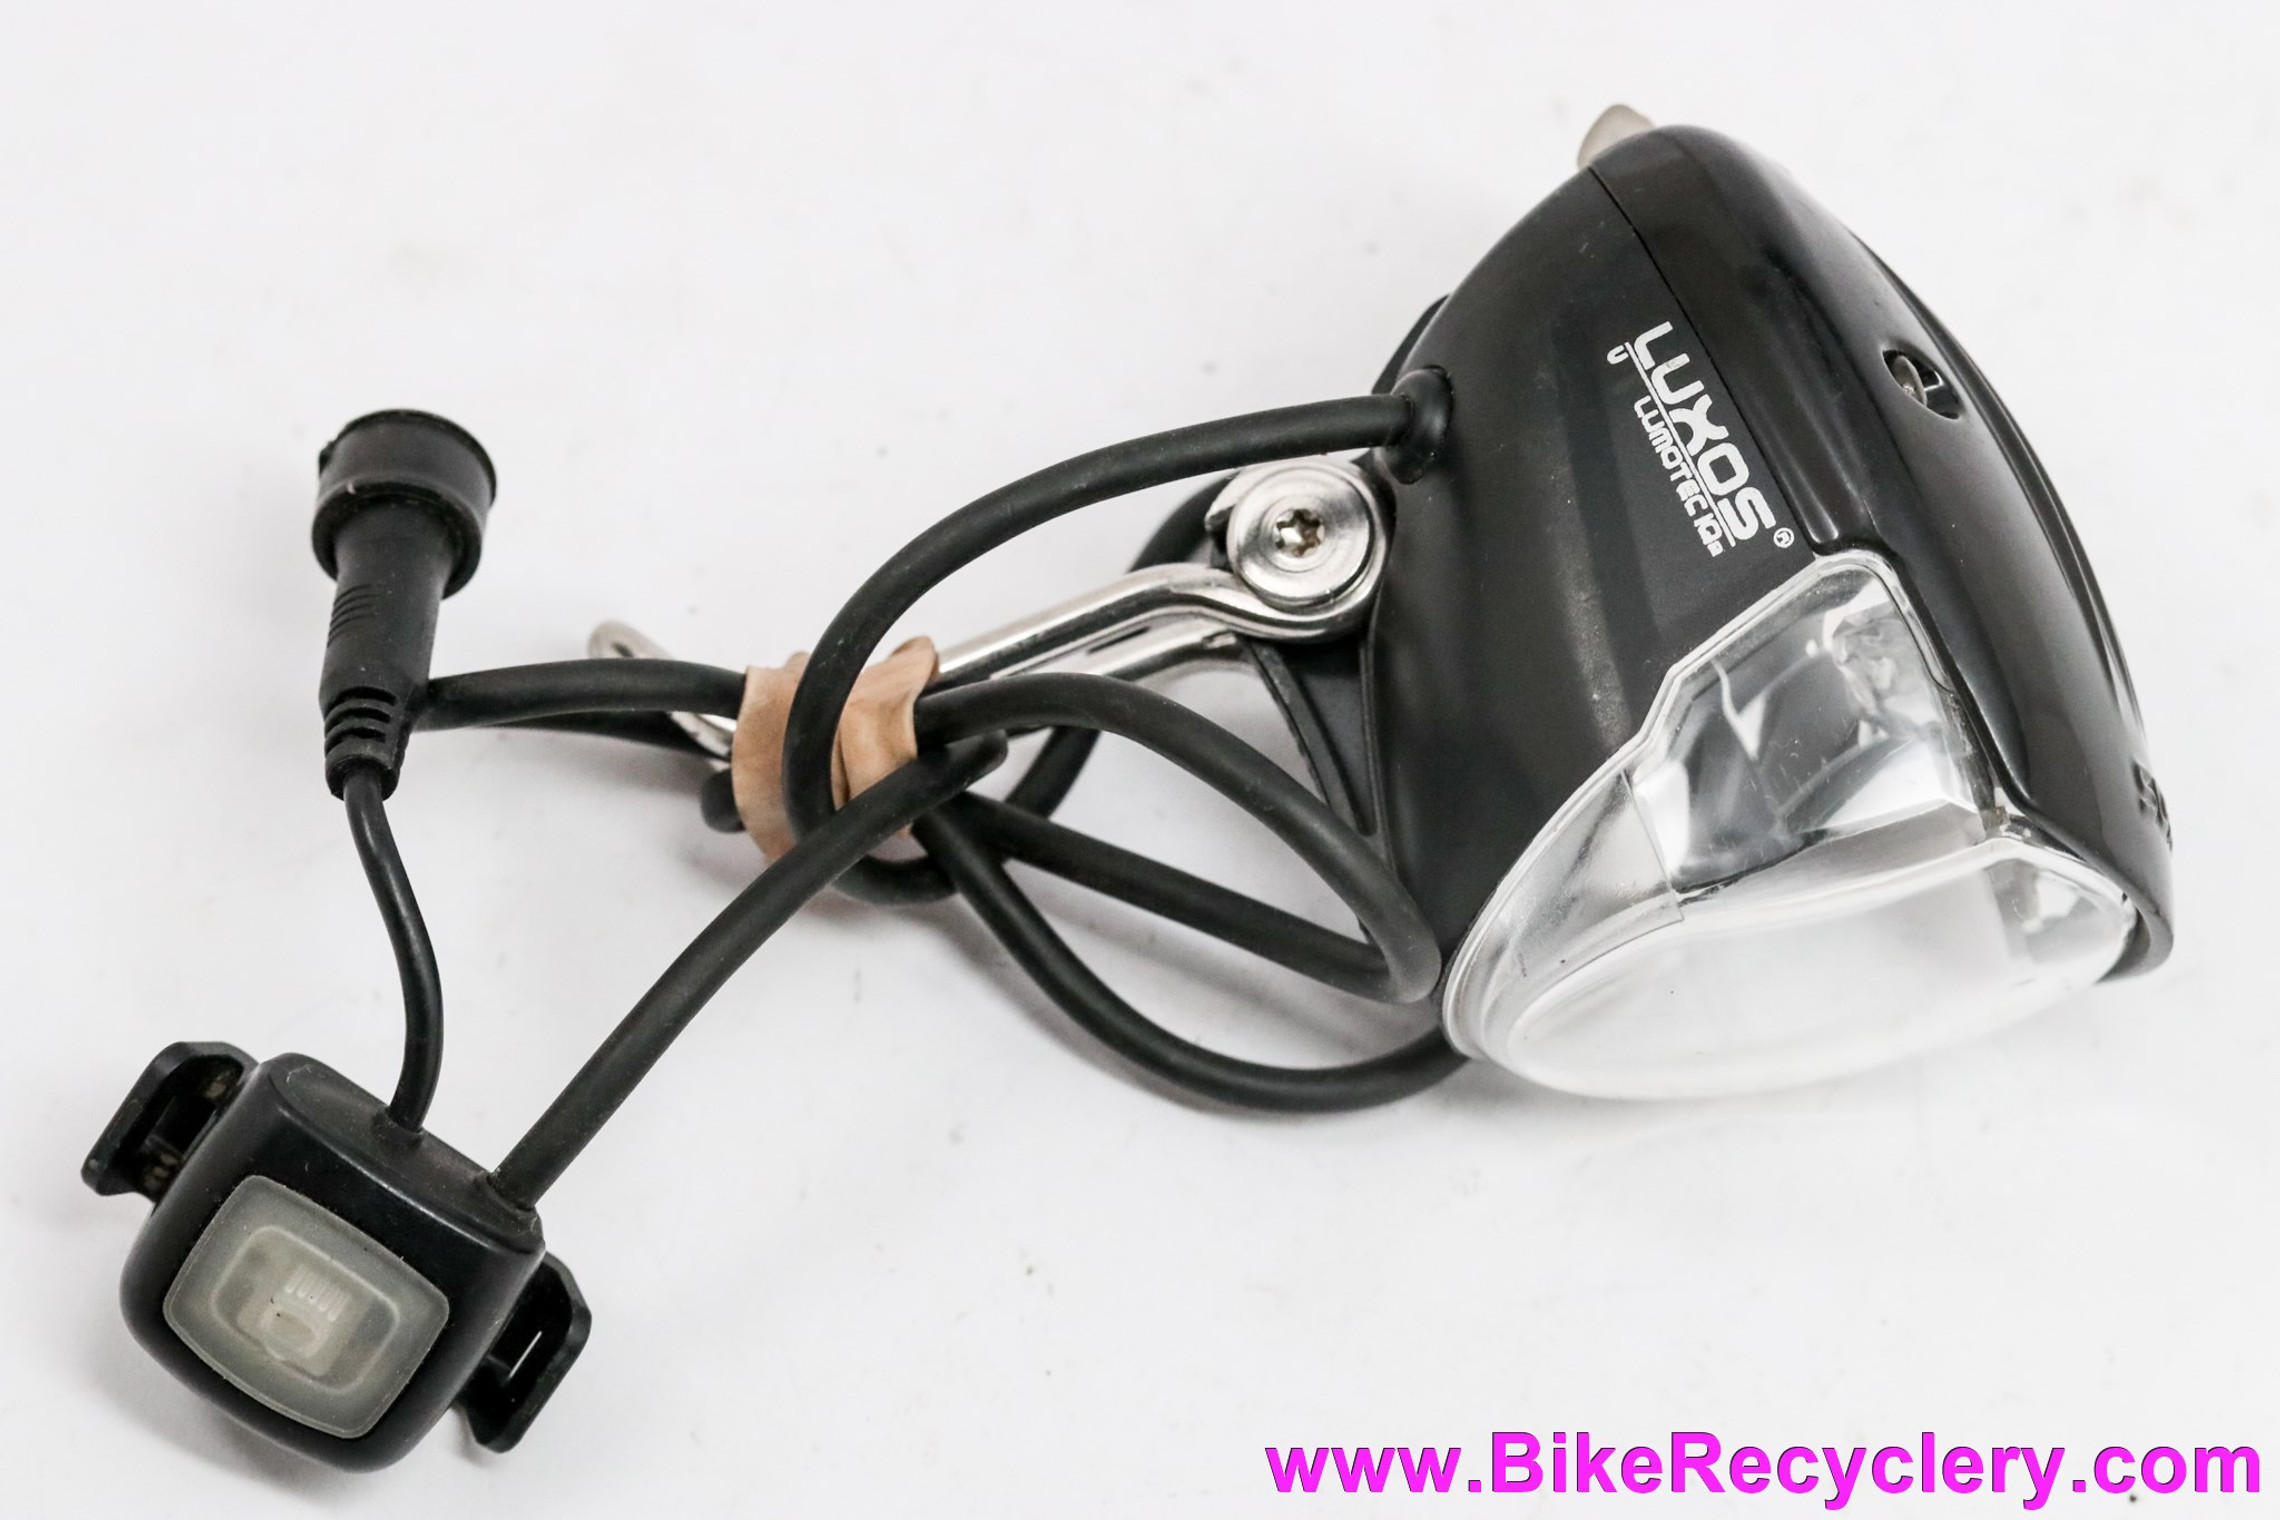 Conform materiaal Feat B&M Lumotec IQ2 Luxos U Dynamo Headlamp (Near Mint) - Bike Recyclery